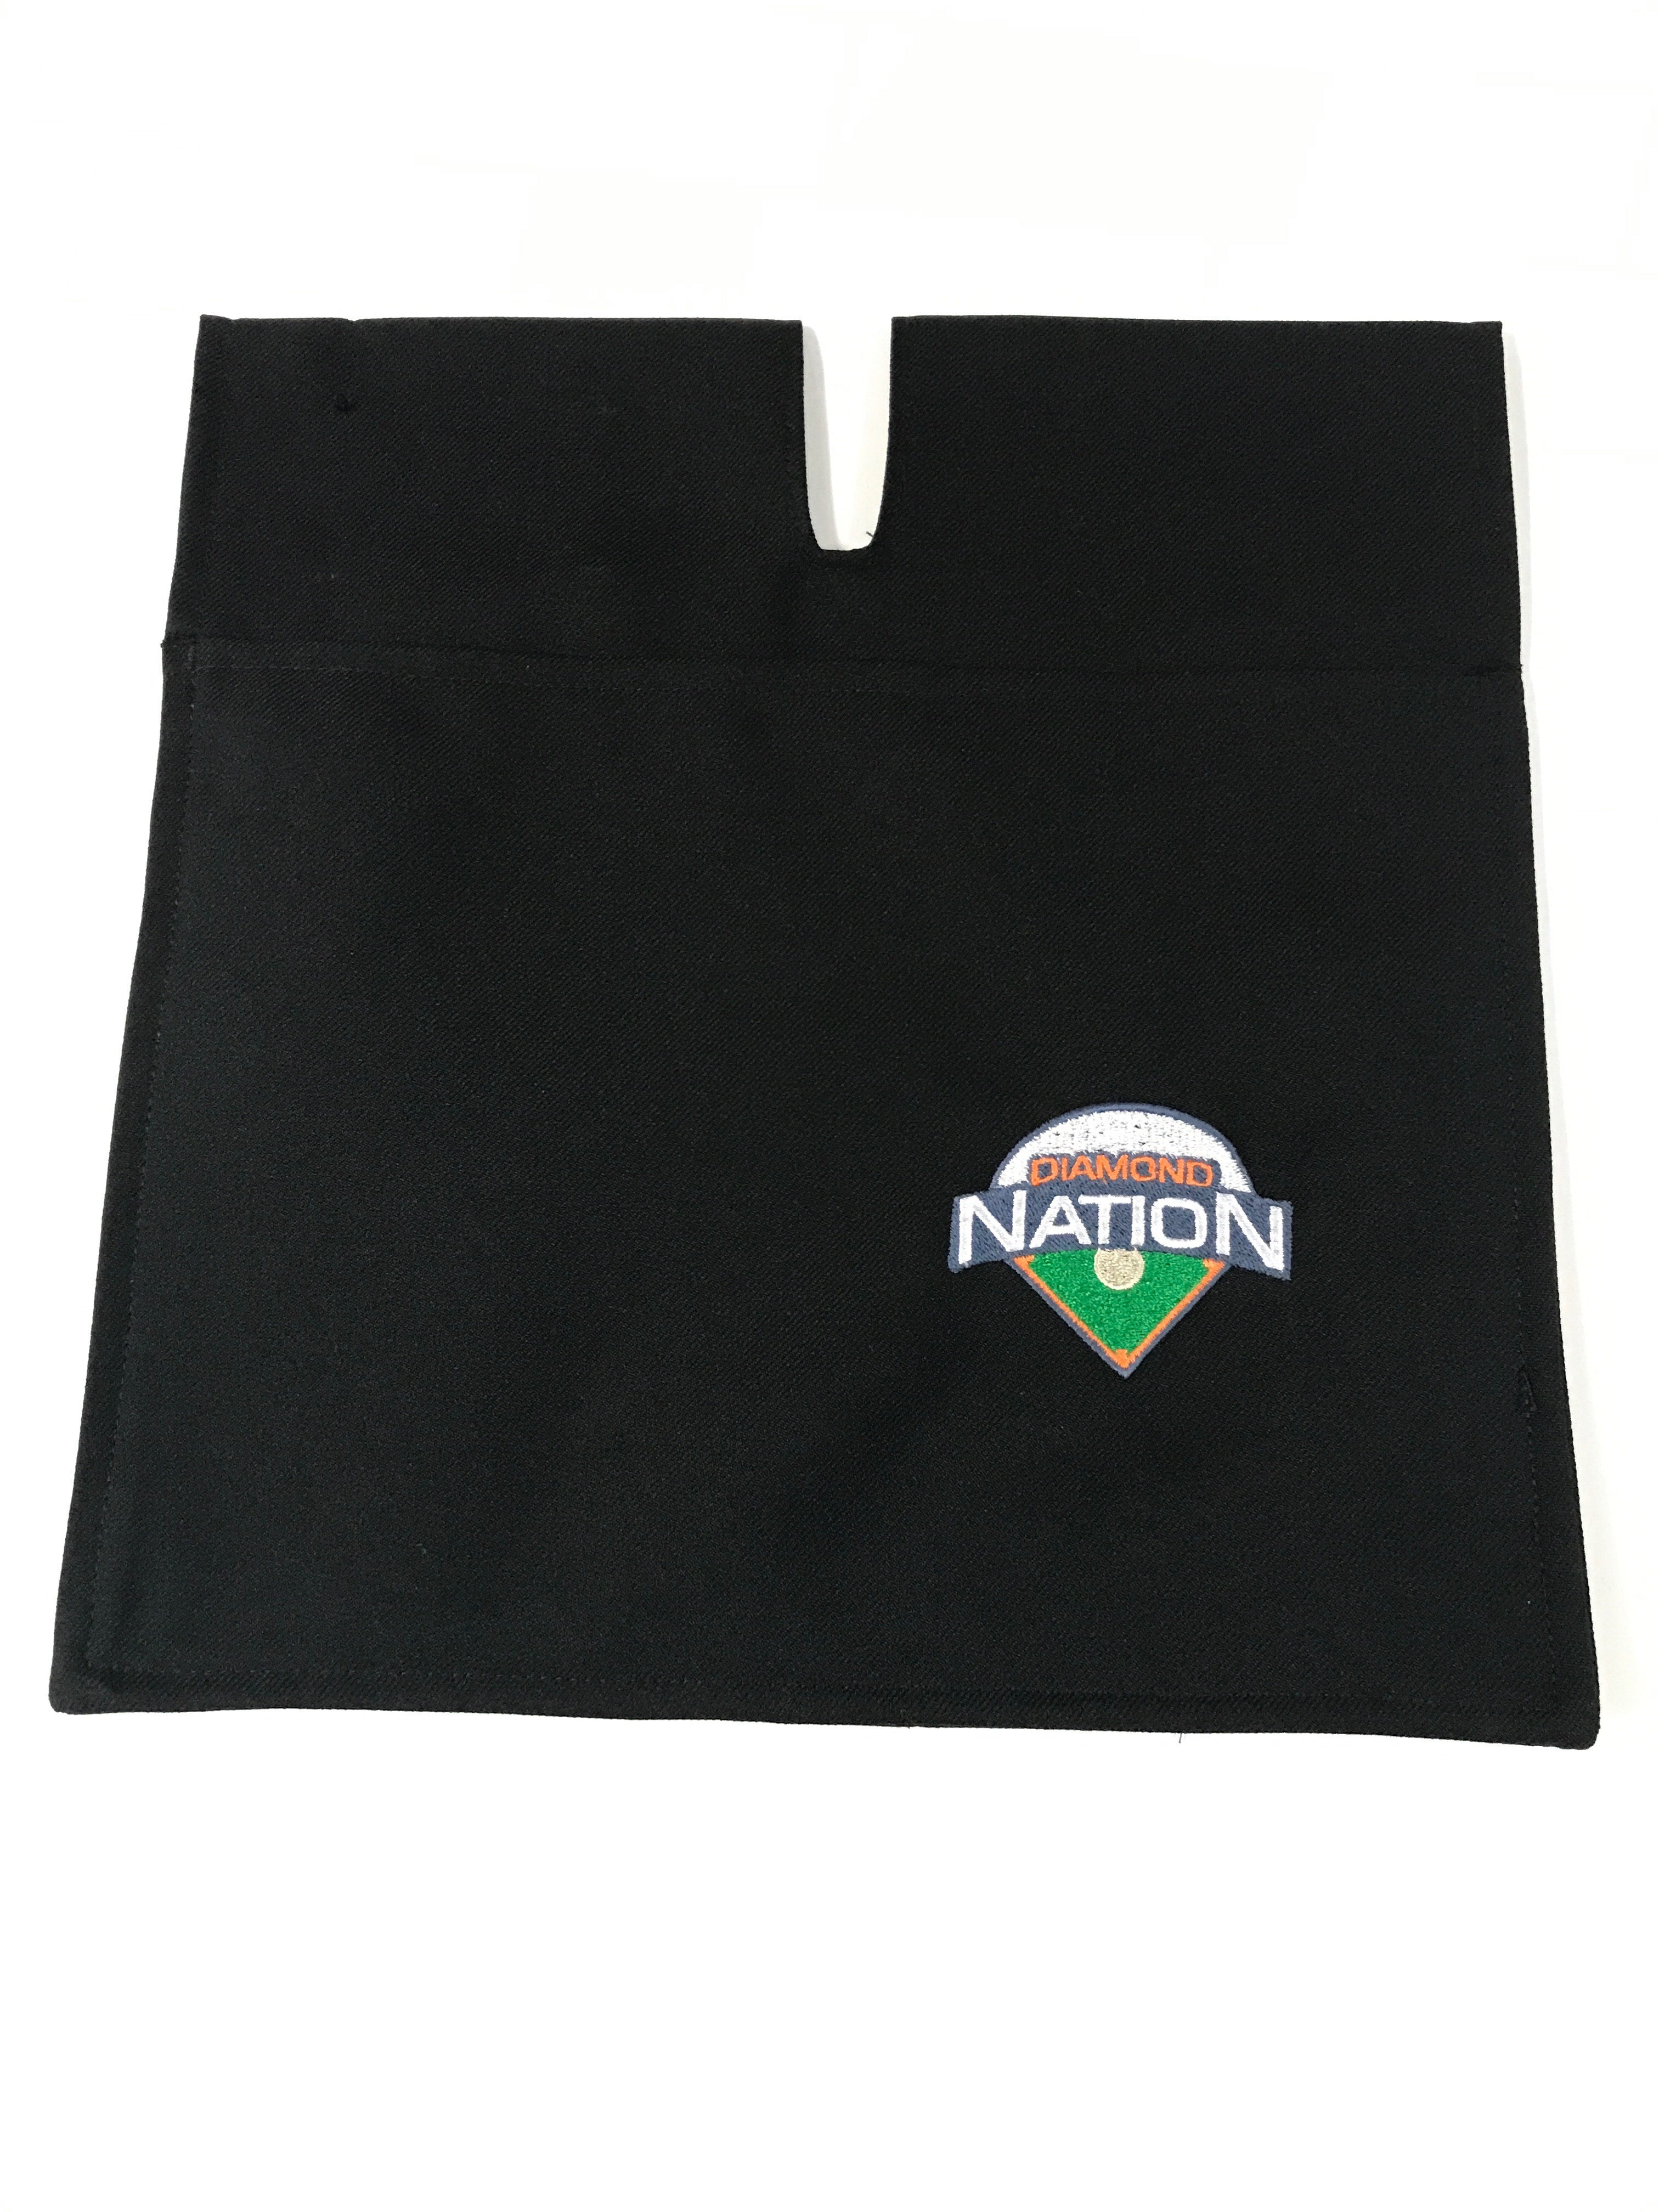 Umpire Ball Bag w/ Diamond Nation Logo | All Sports Officials